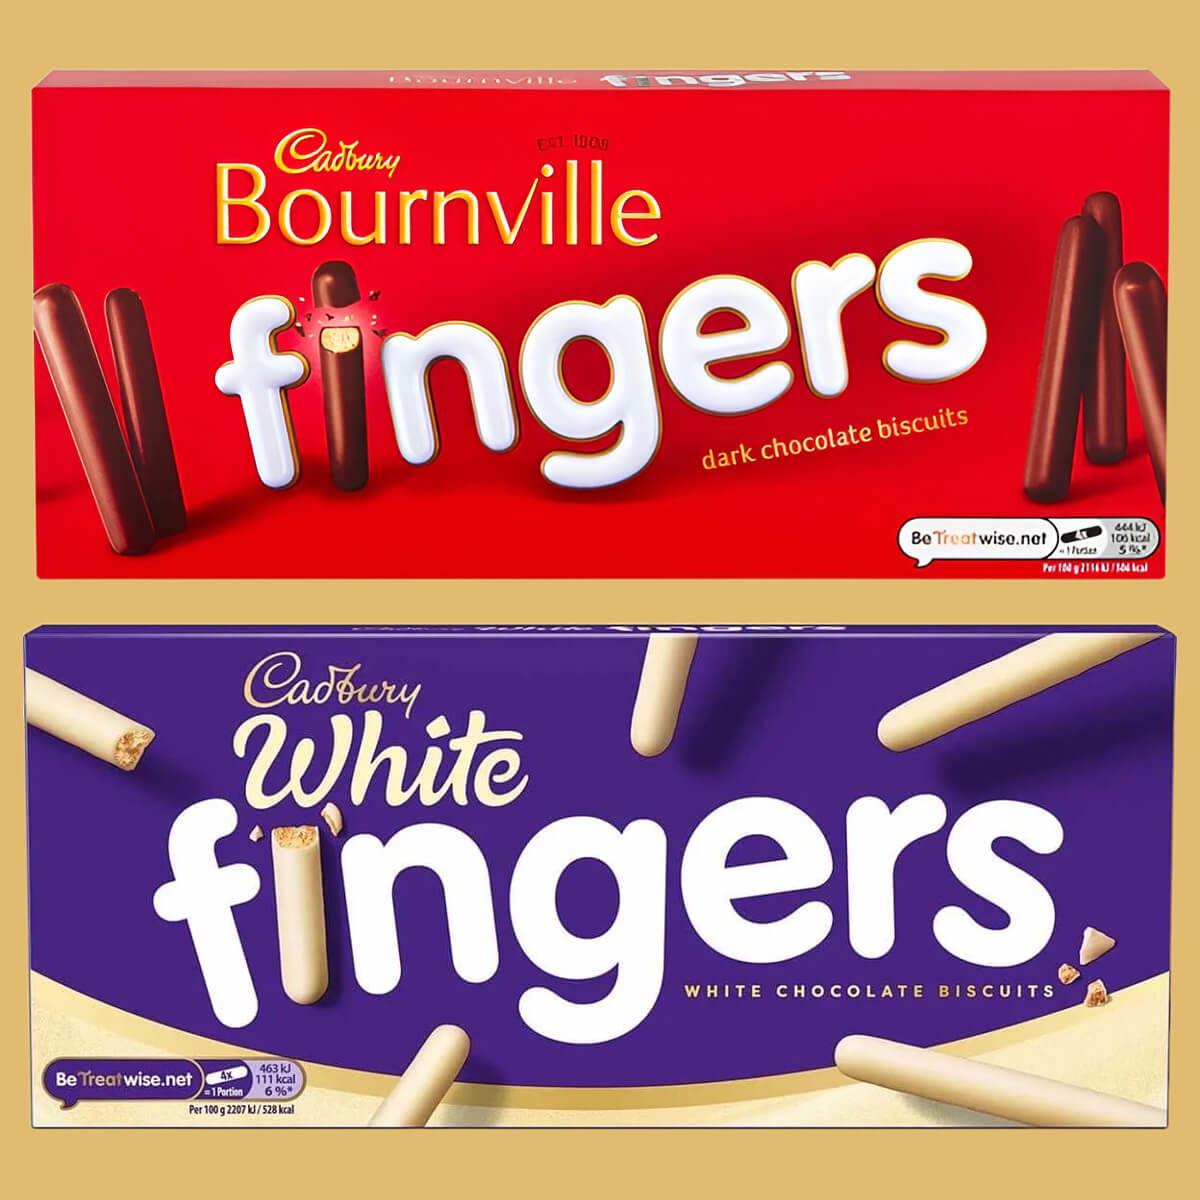 Cadbury's Chocolate Fingers: The Timeless Temptation